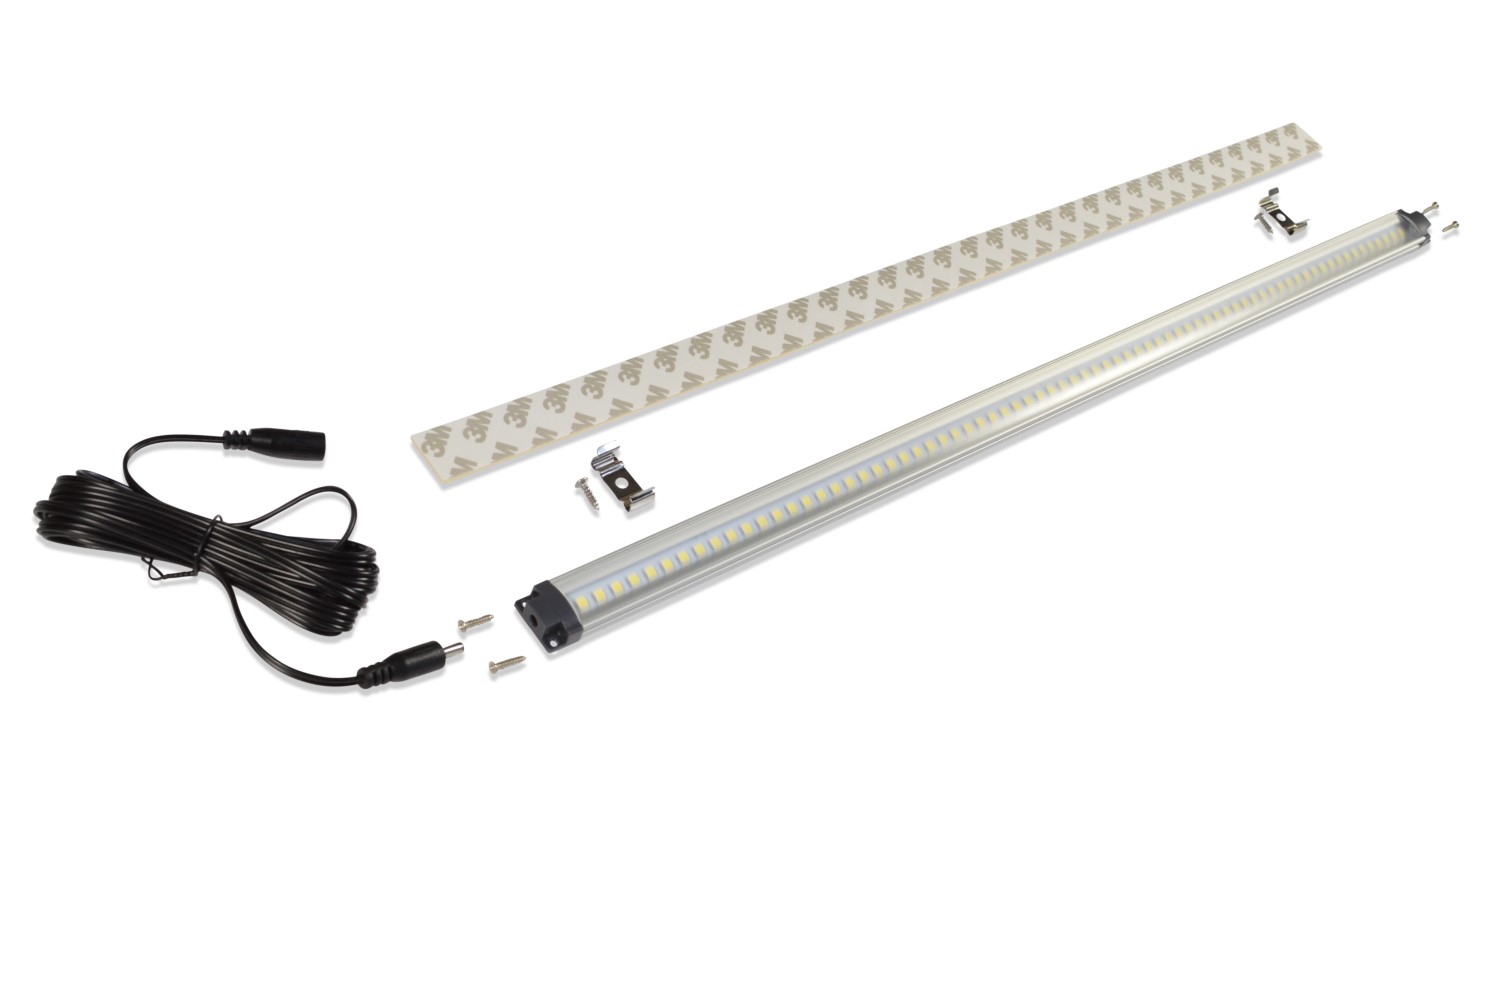 Laadruimte LED strip 50 cm | Parts Expert